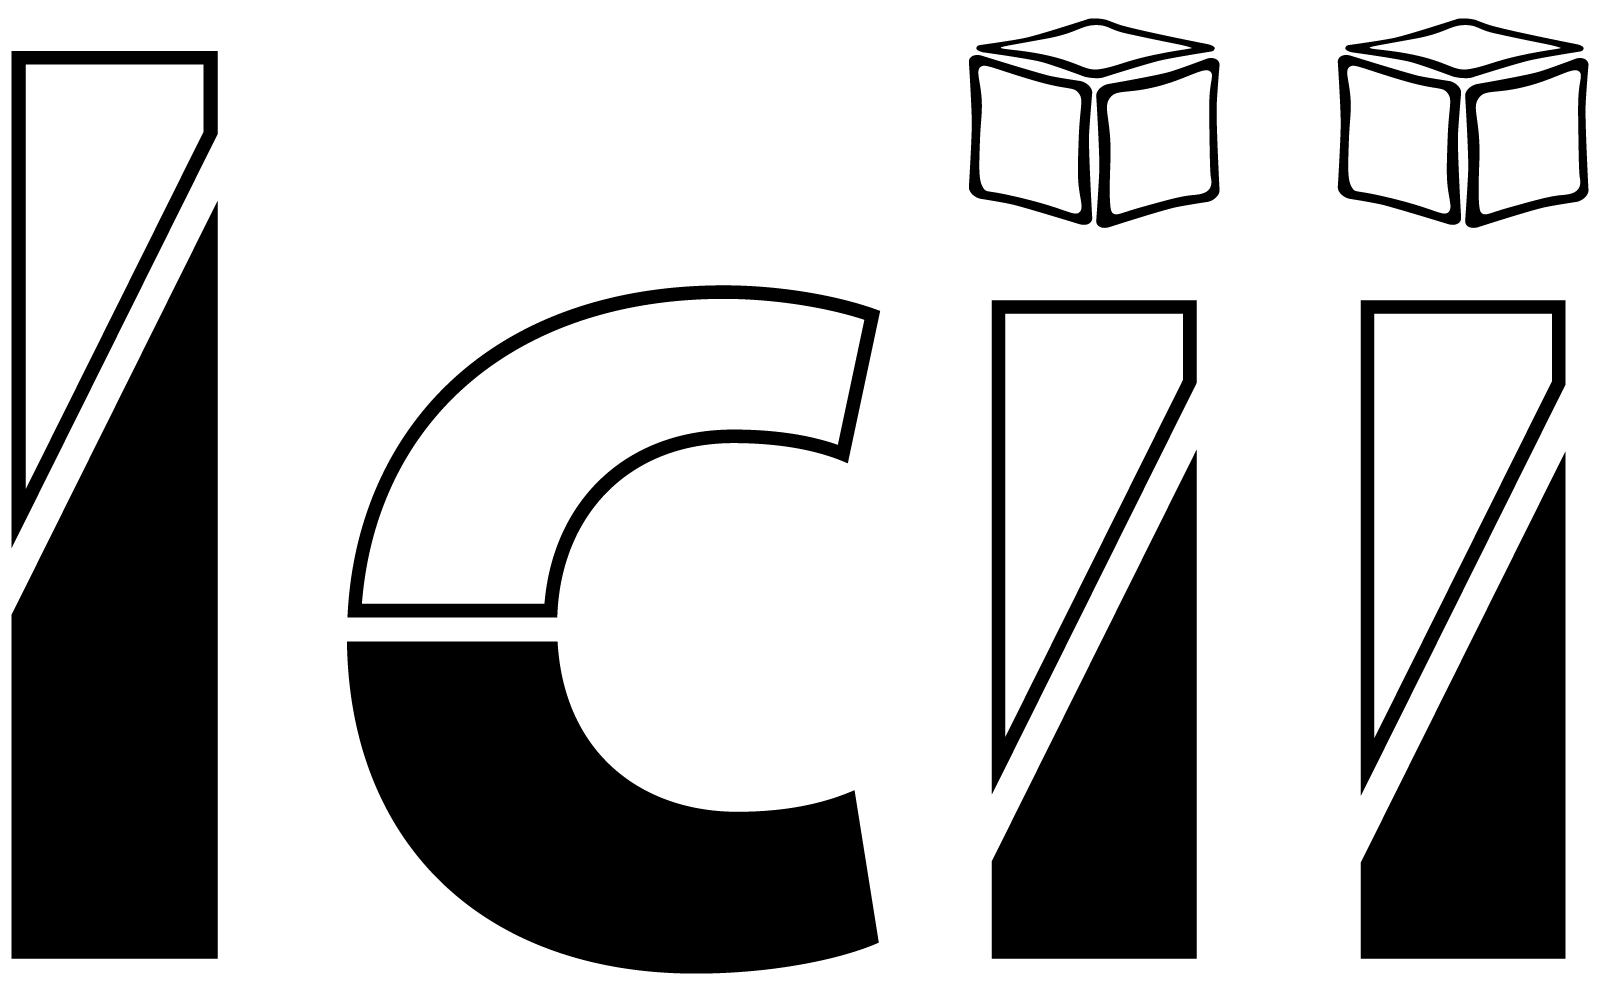 Icii Logo